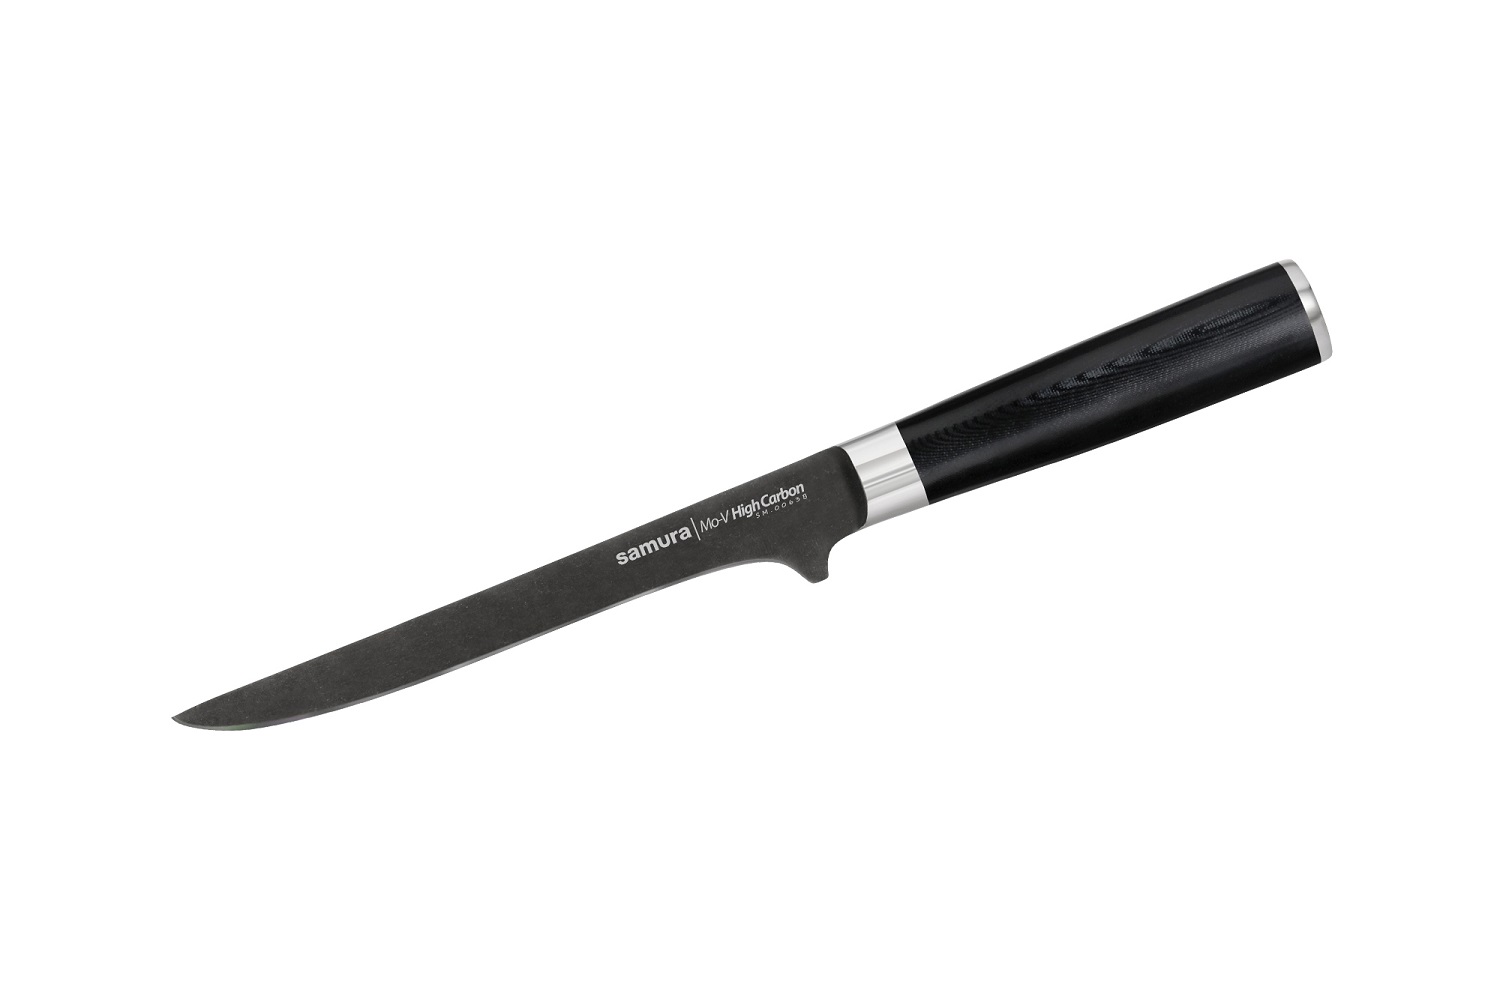 Нож Samura обвалочный Mo-V Stonewash, 16,5 см, G-10 нож samura обвалочный mo v 16 5 см g 10